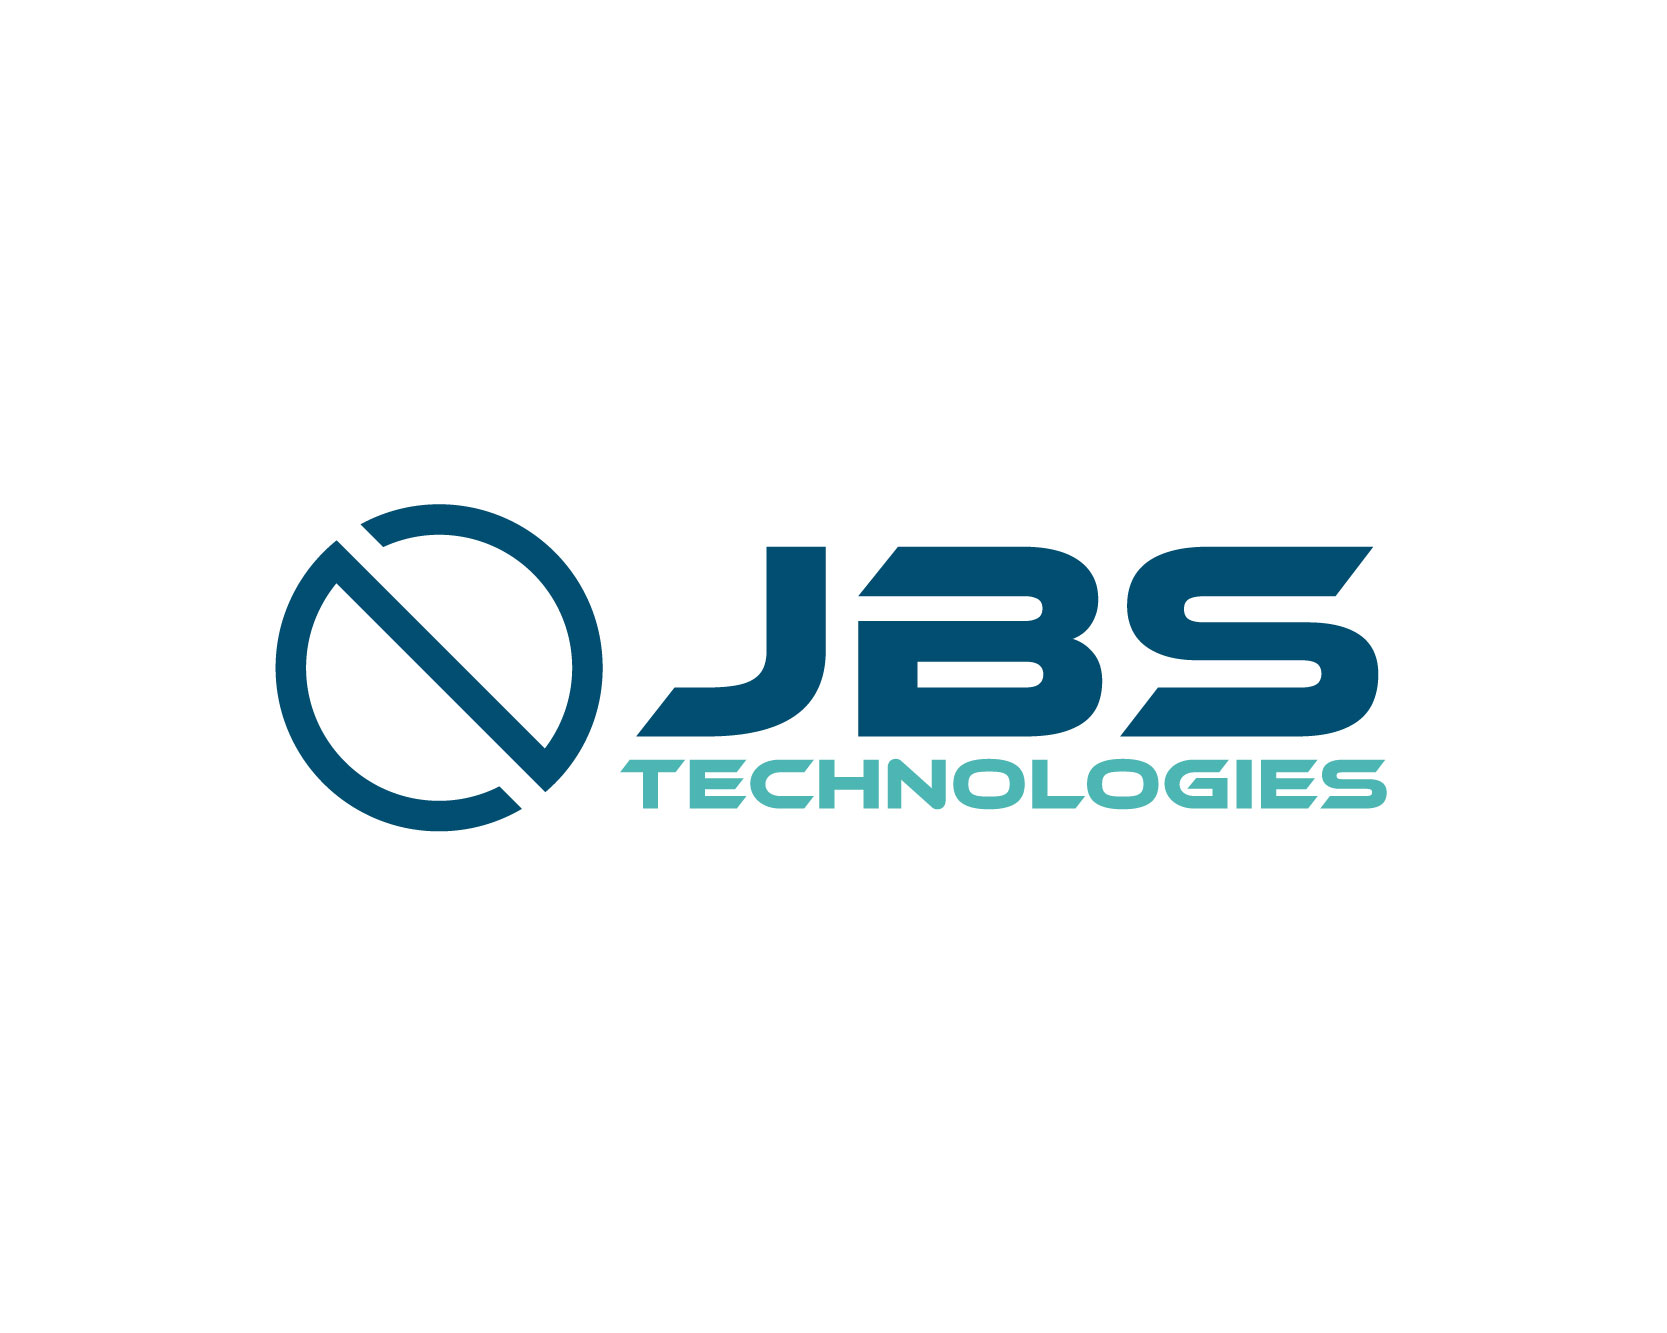 JBS logo vector download free